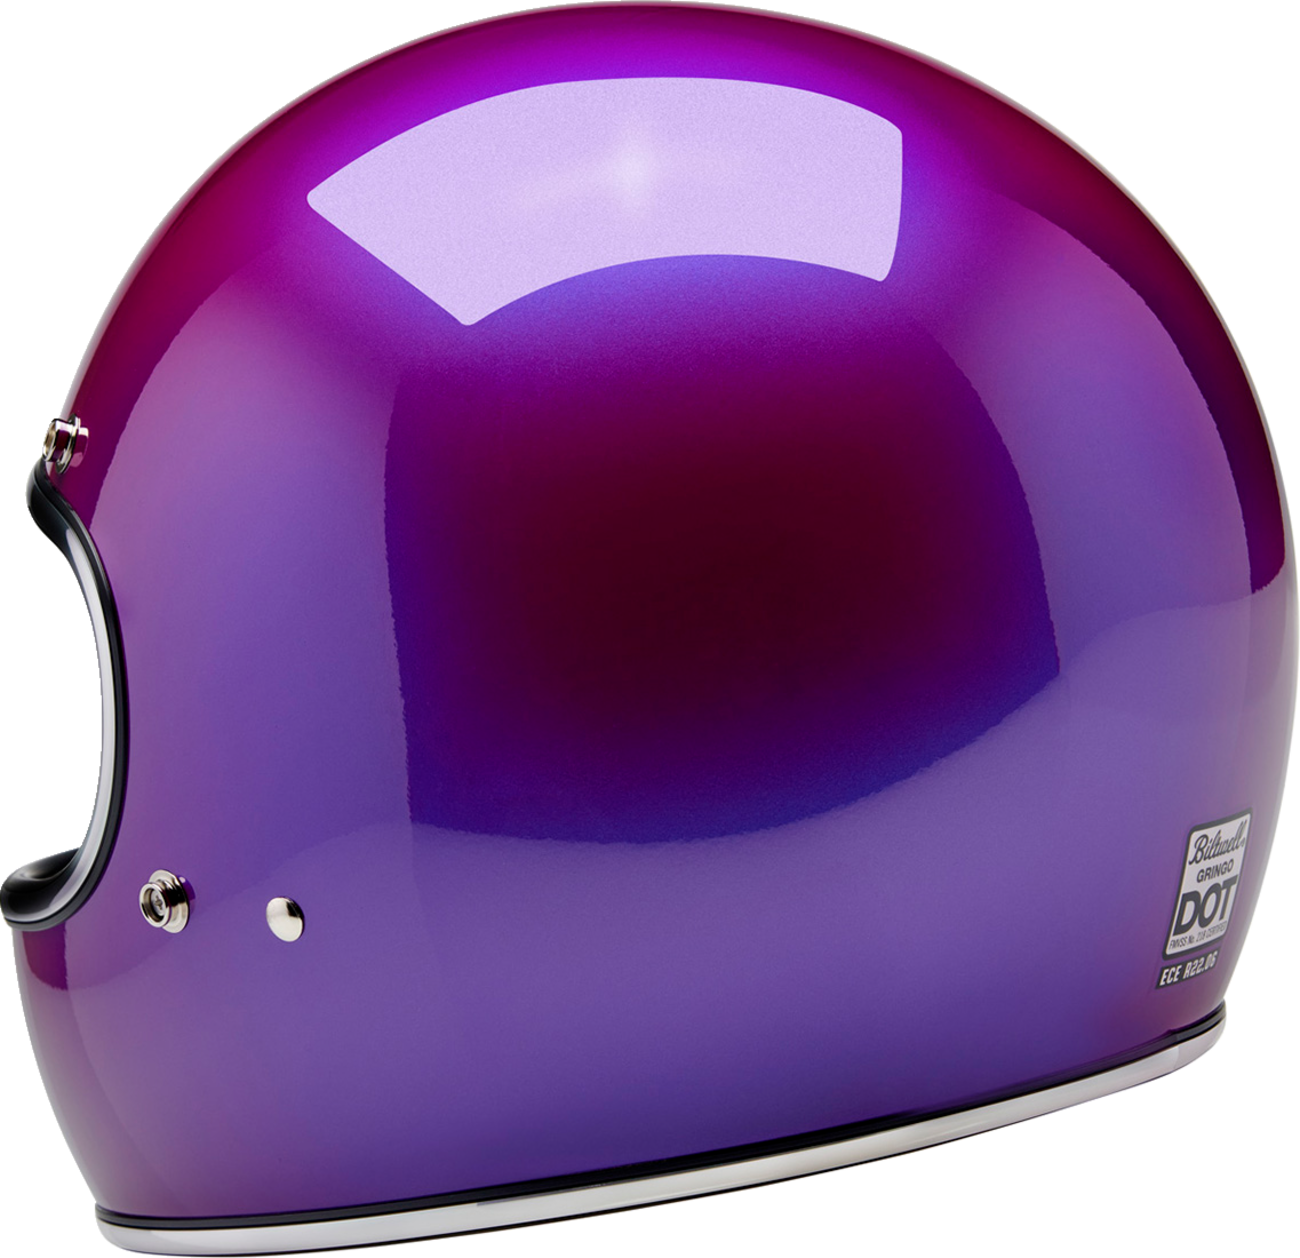 BILTWELL Gringo Helmet - Metallic Grape - XL 1002-339-505